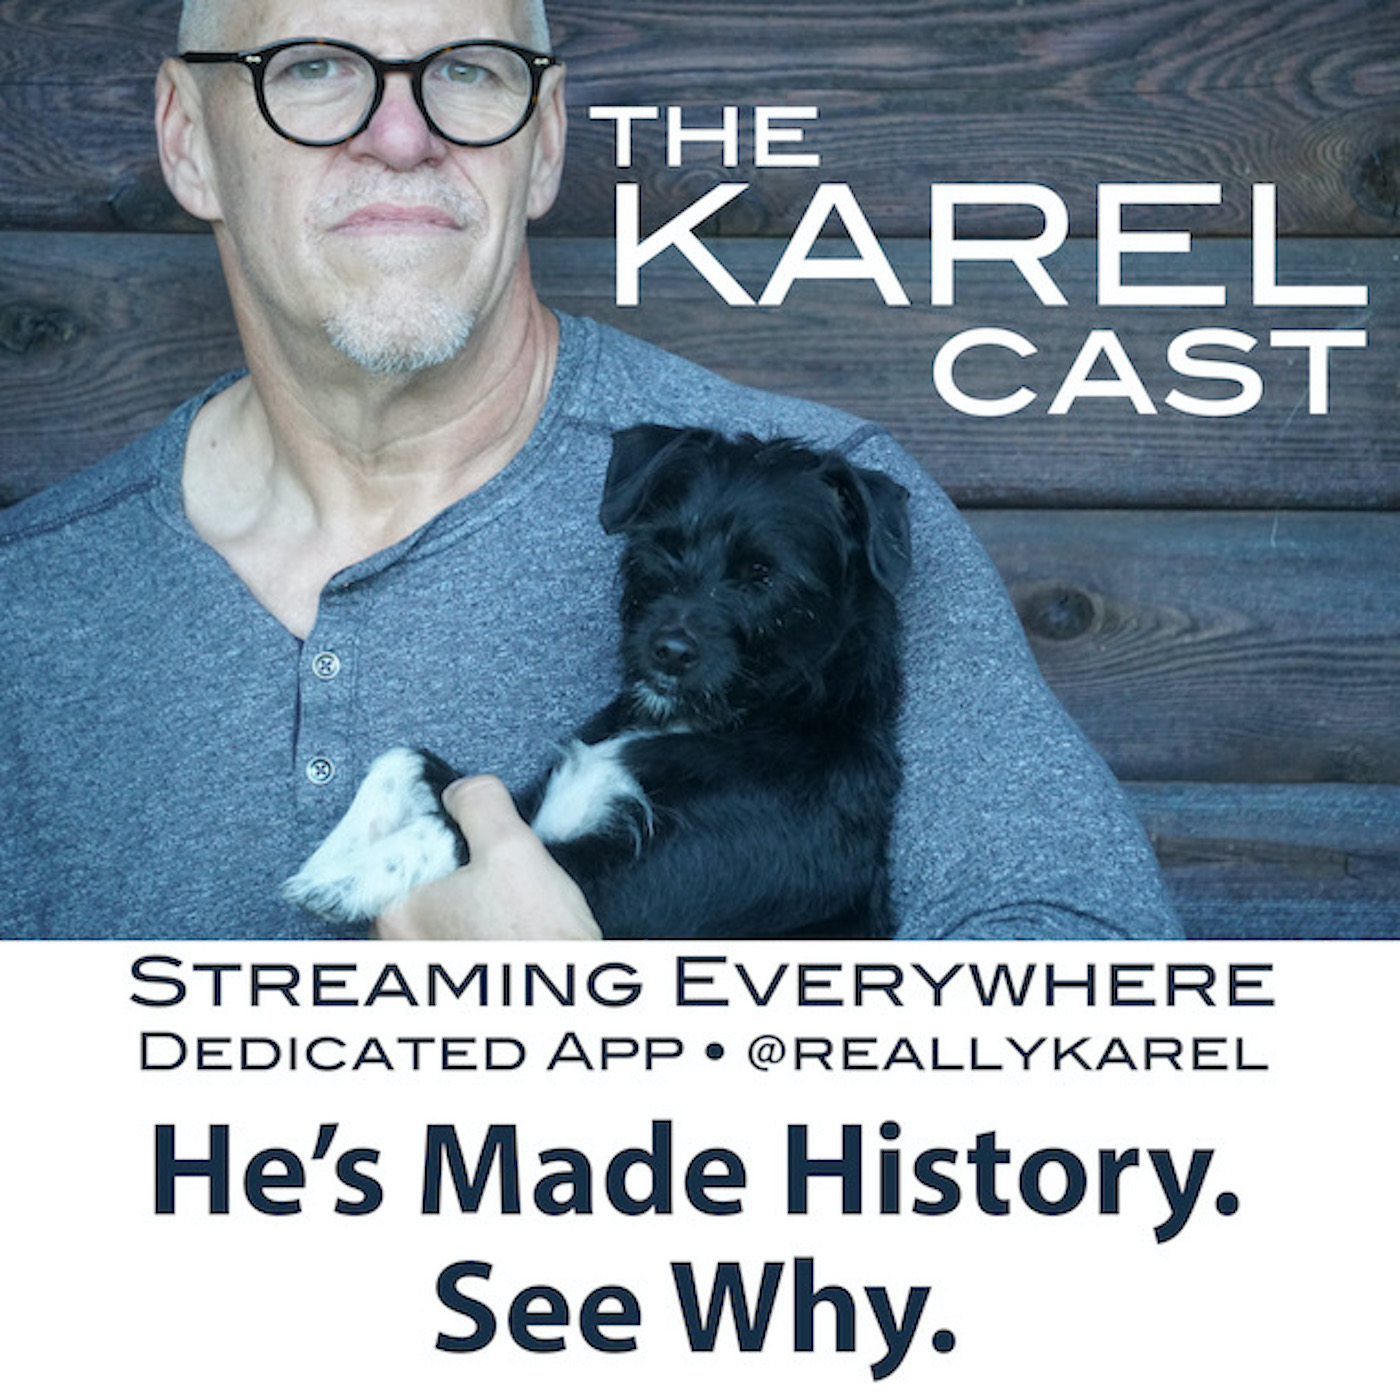 The Karel Cast